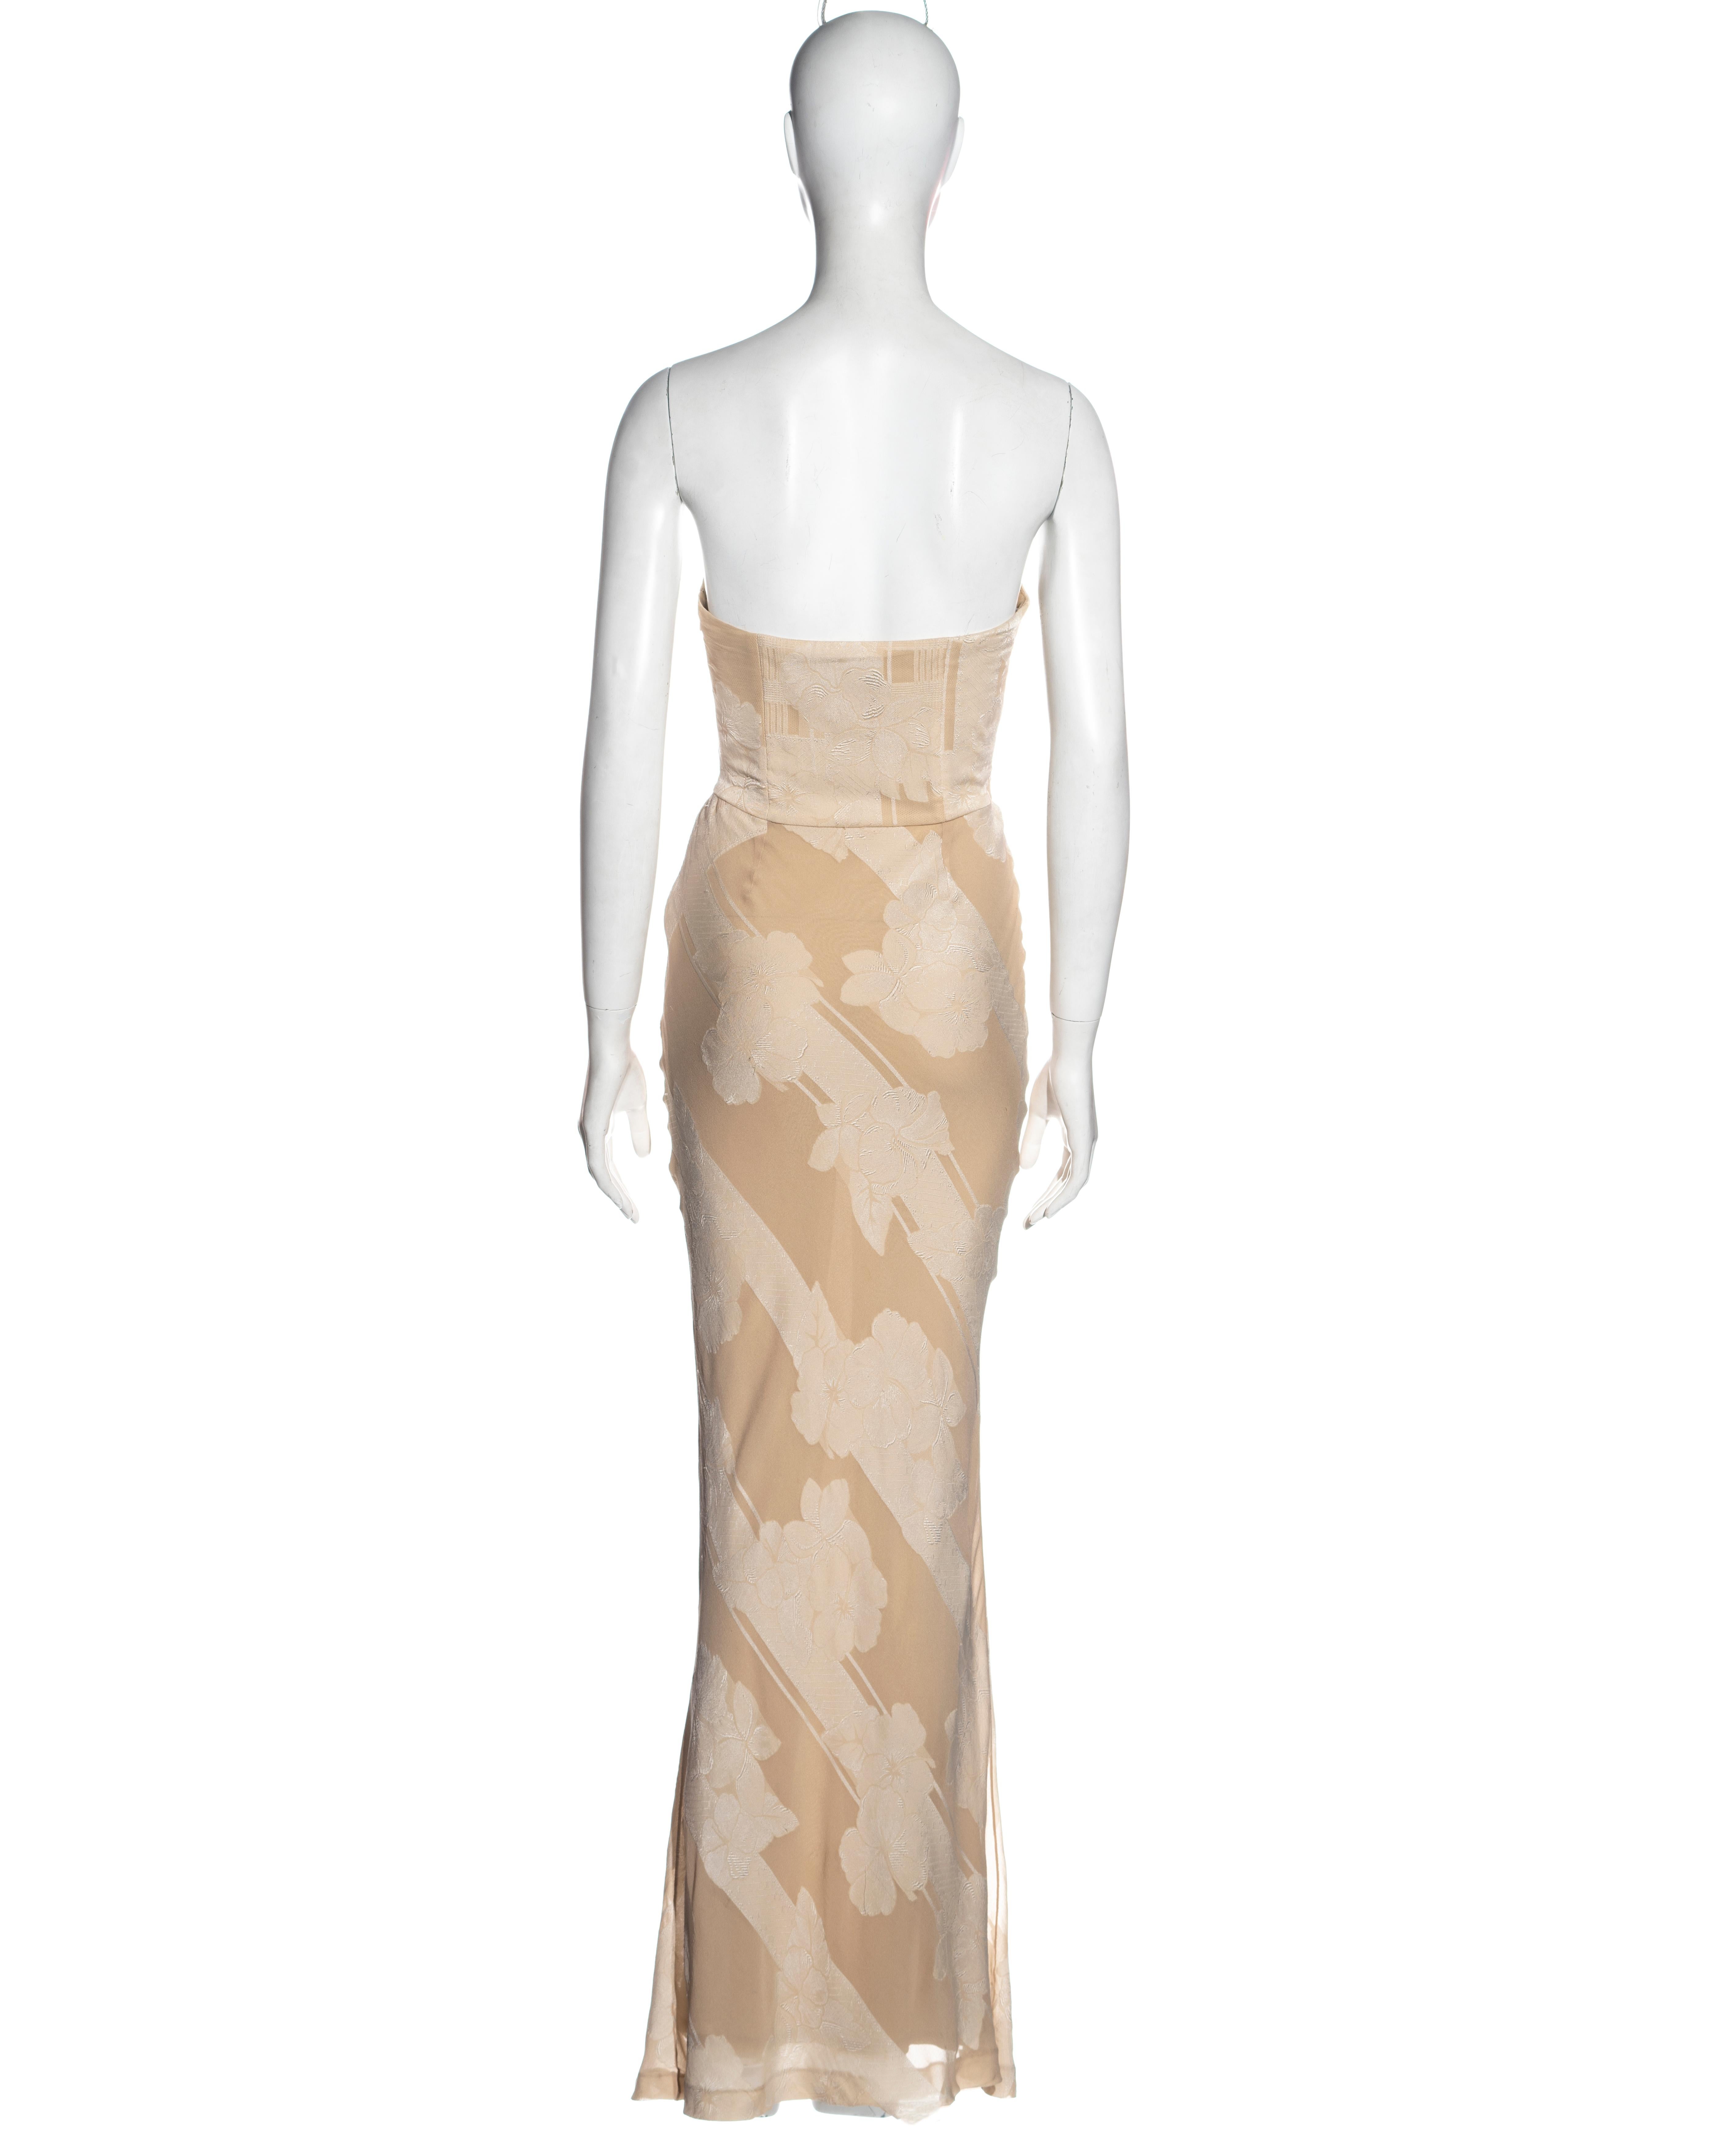 Christian Dior by John Galliano silk brocade strapless bias cut dress, ss 1998 2